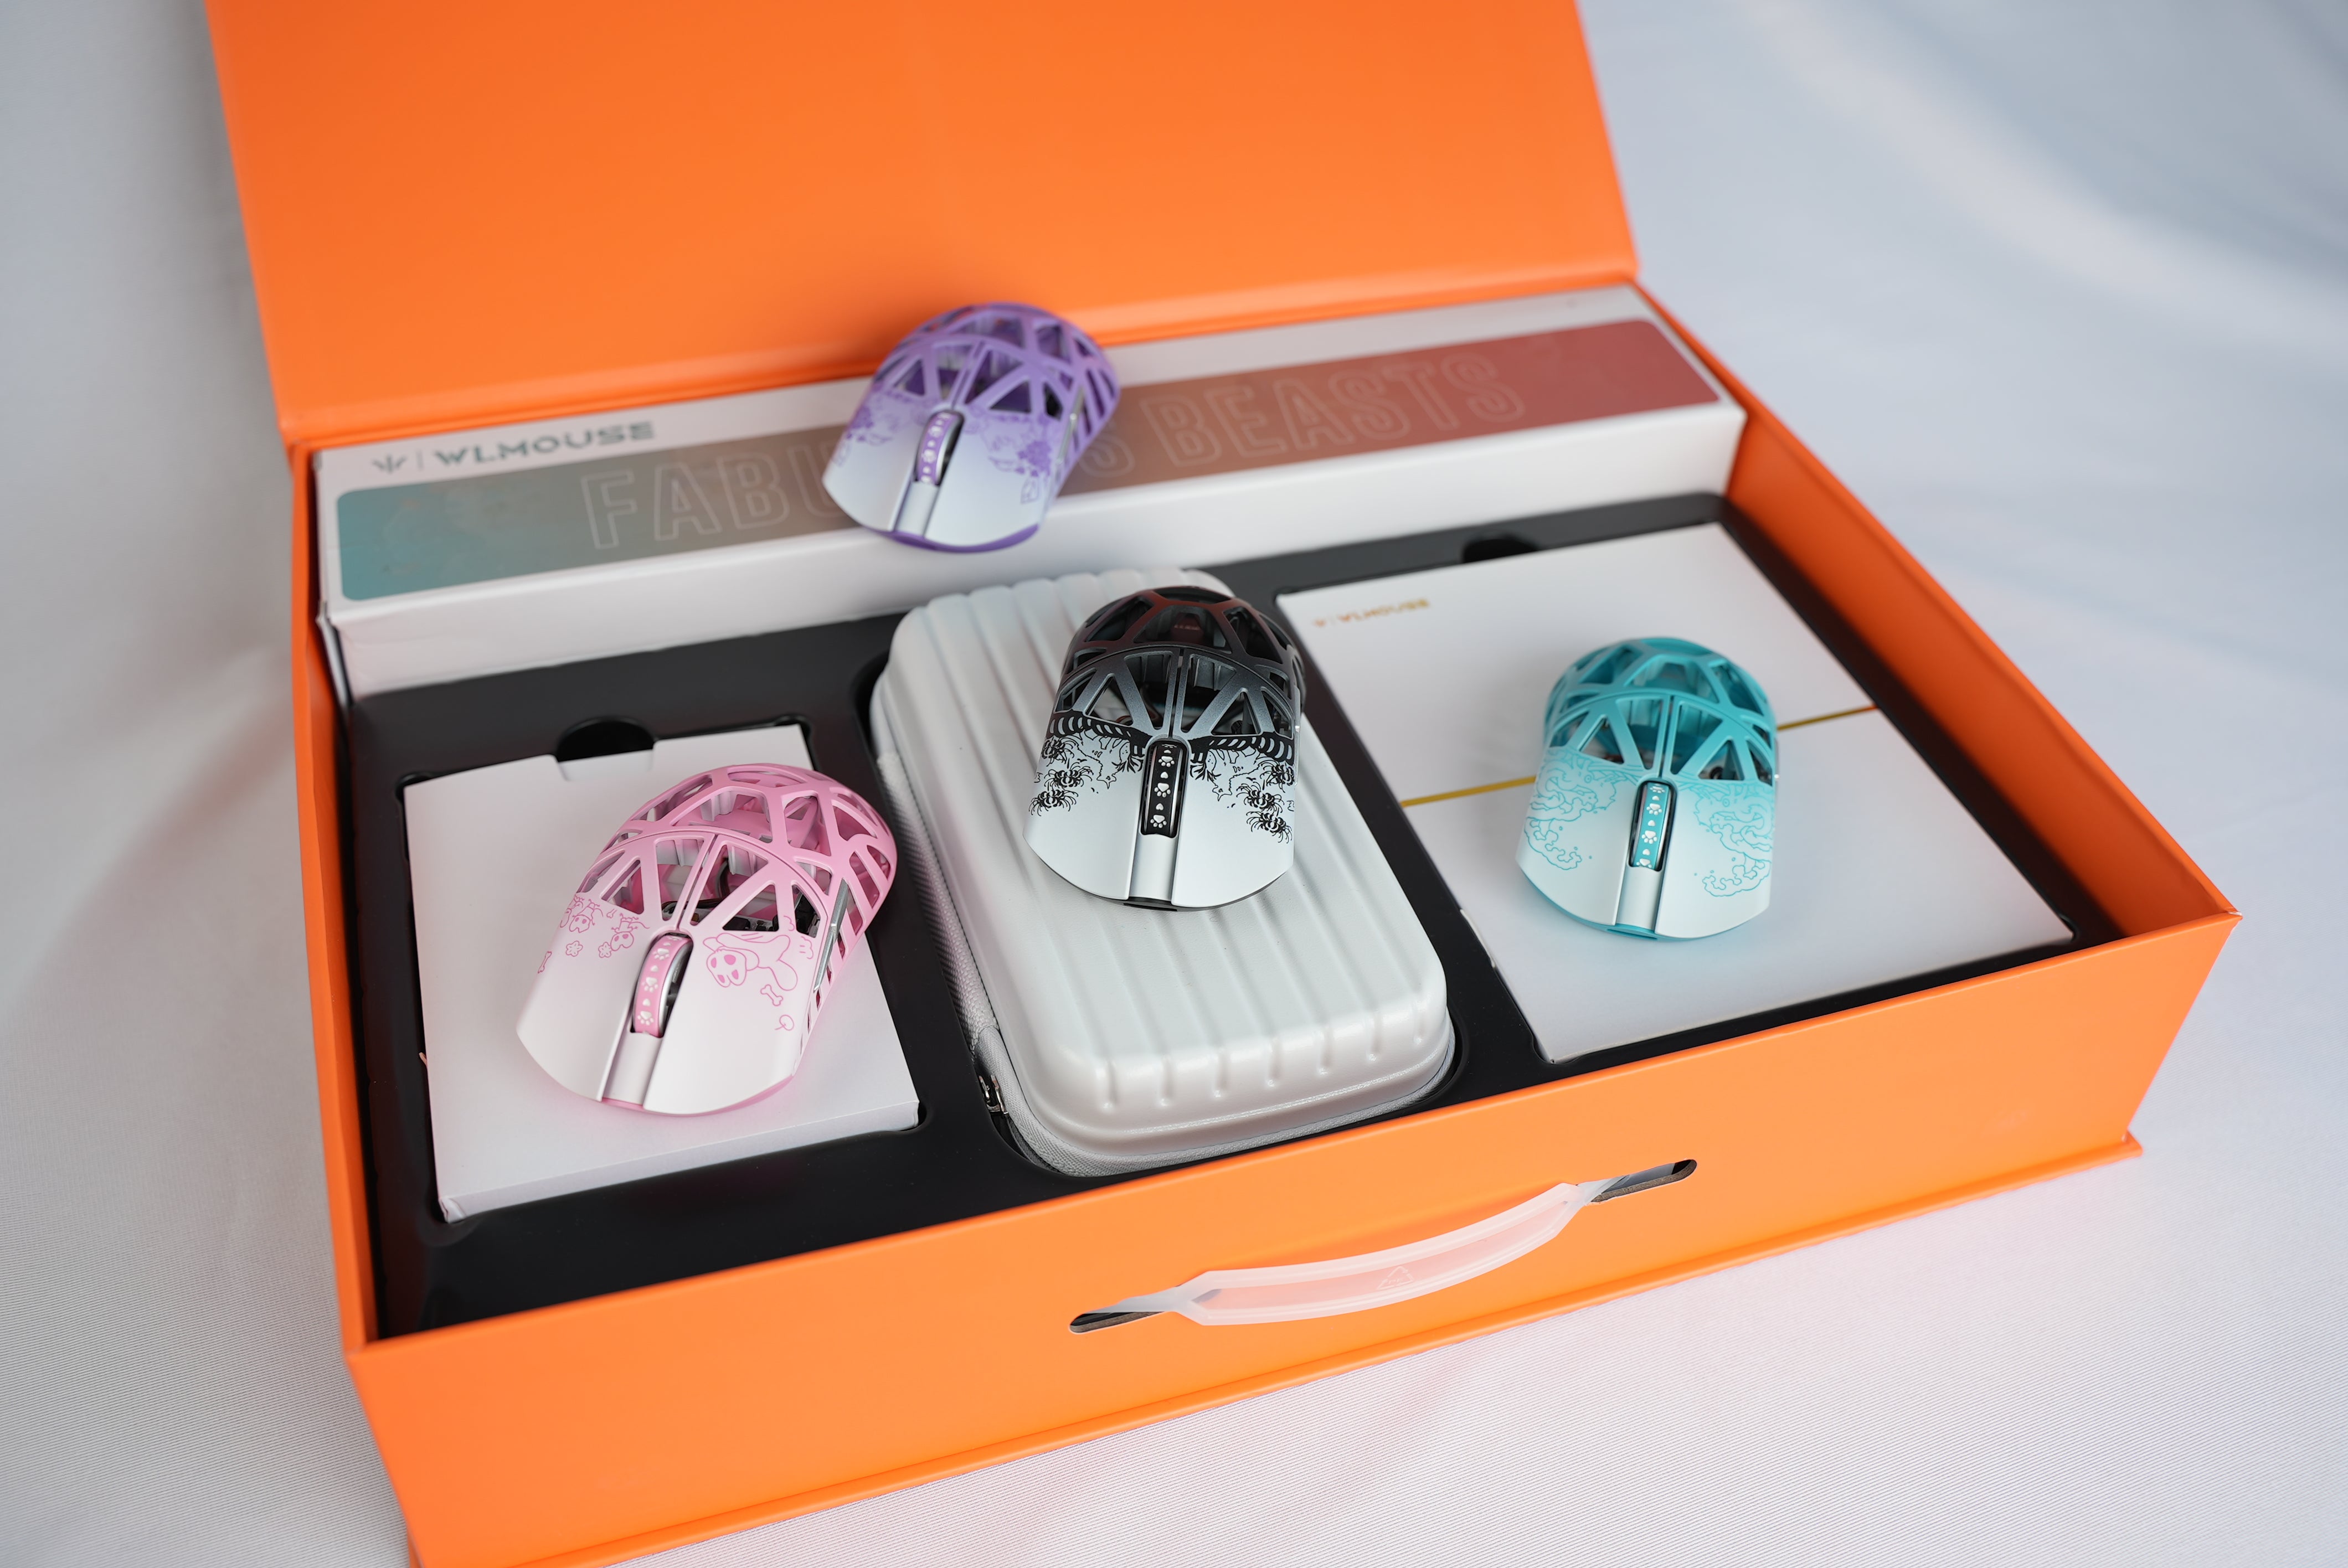 Fabulous Beasts X 8K Wireless Mouse - Limited Edition Box Set